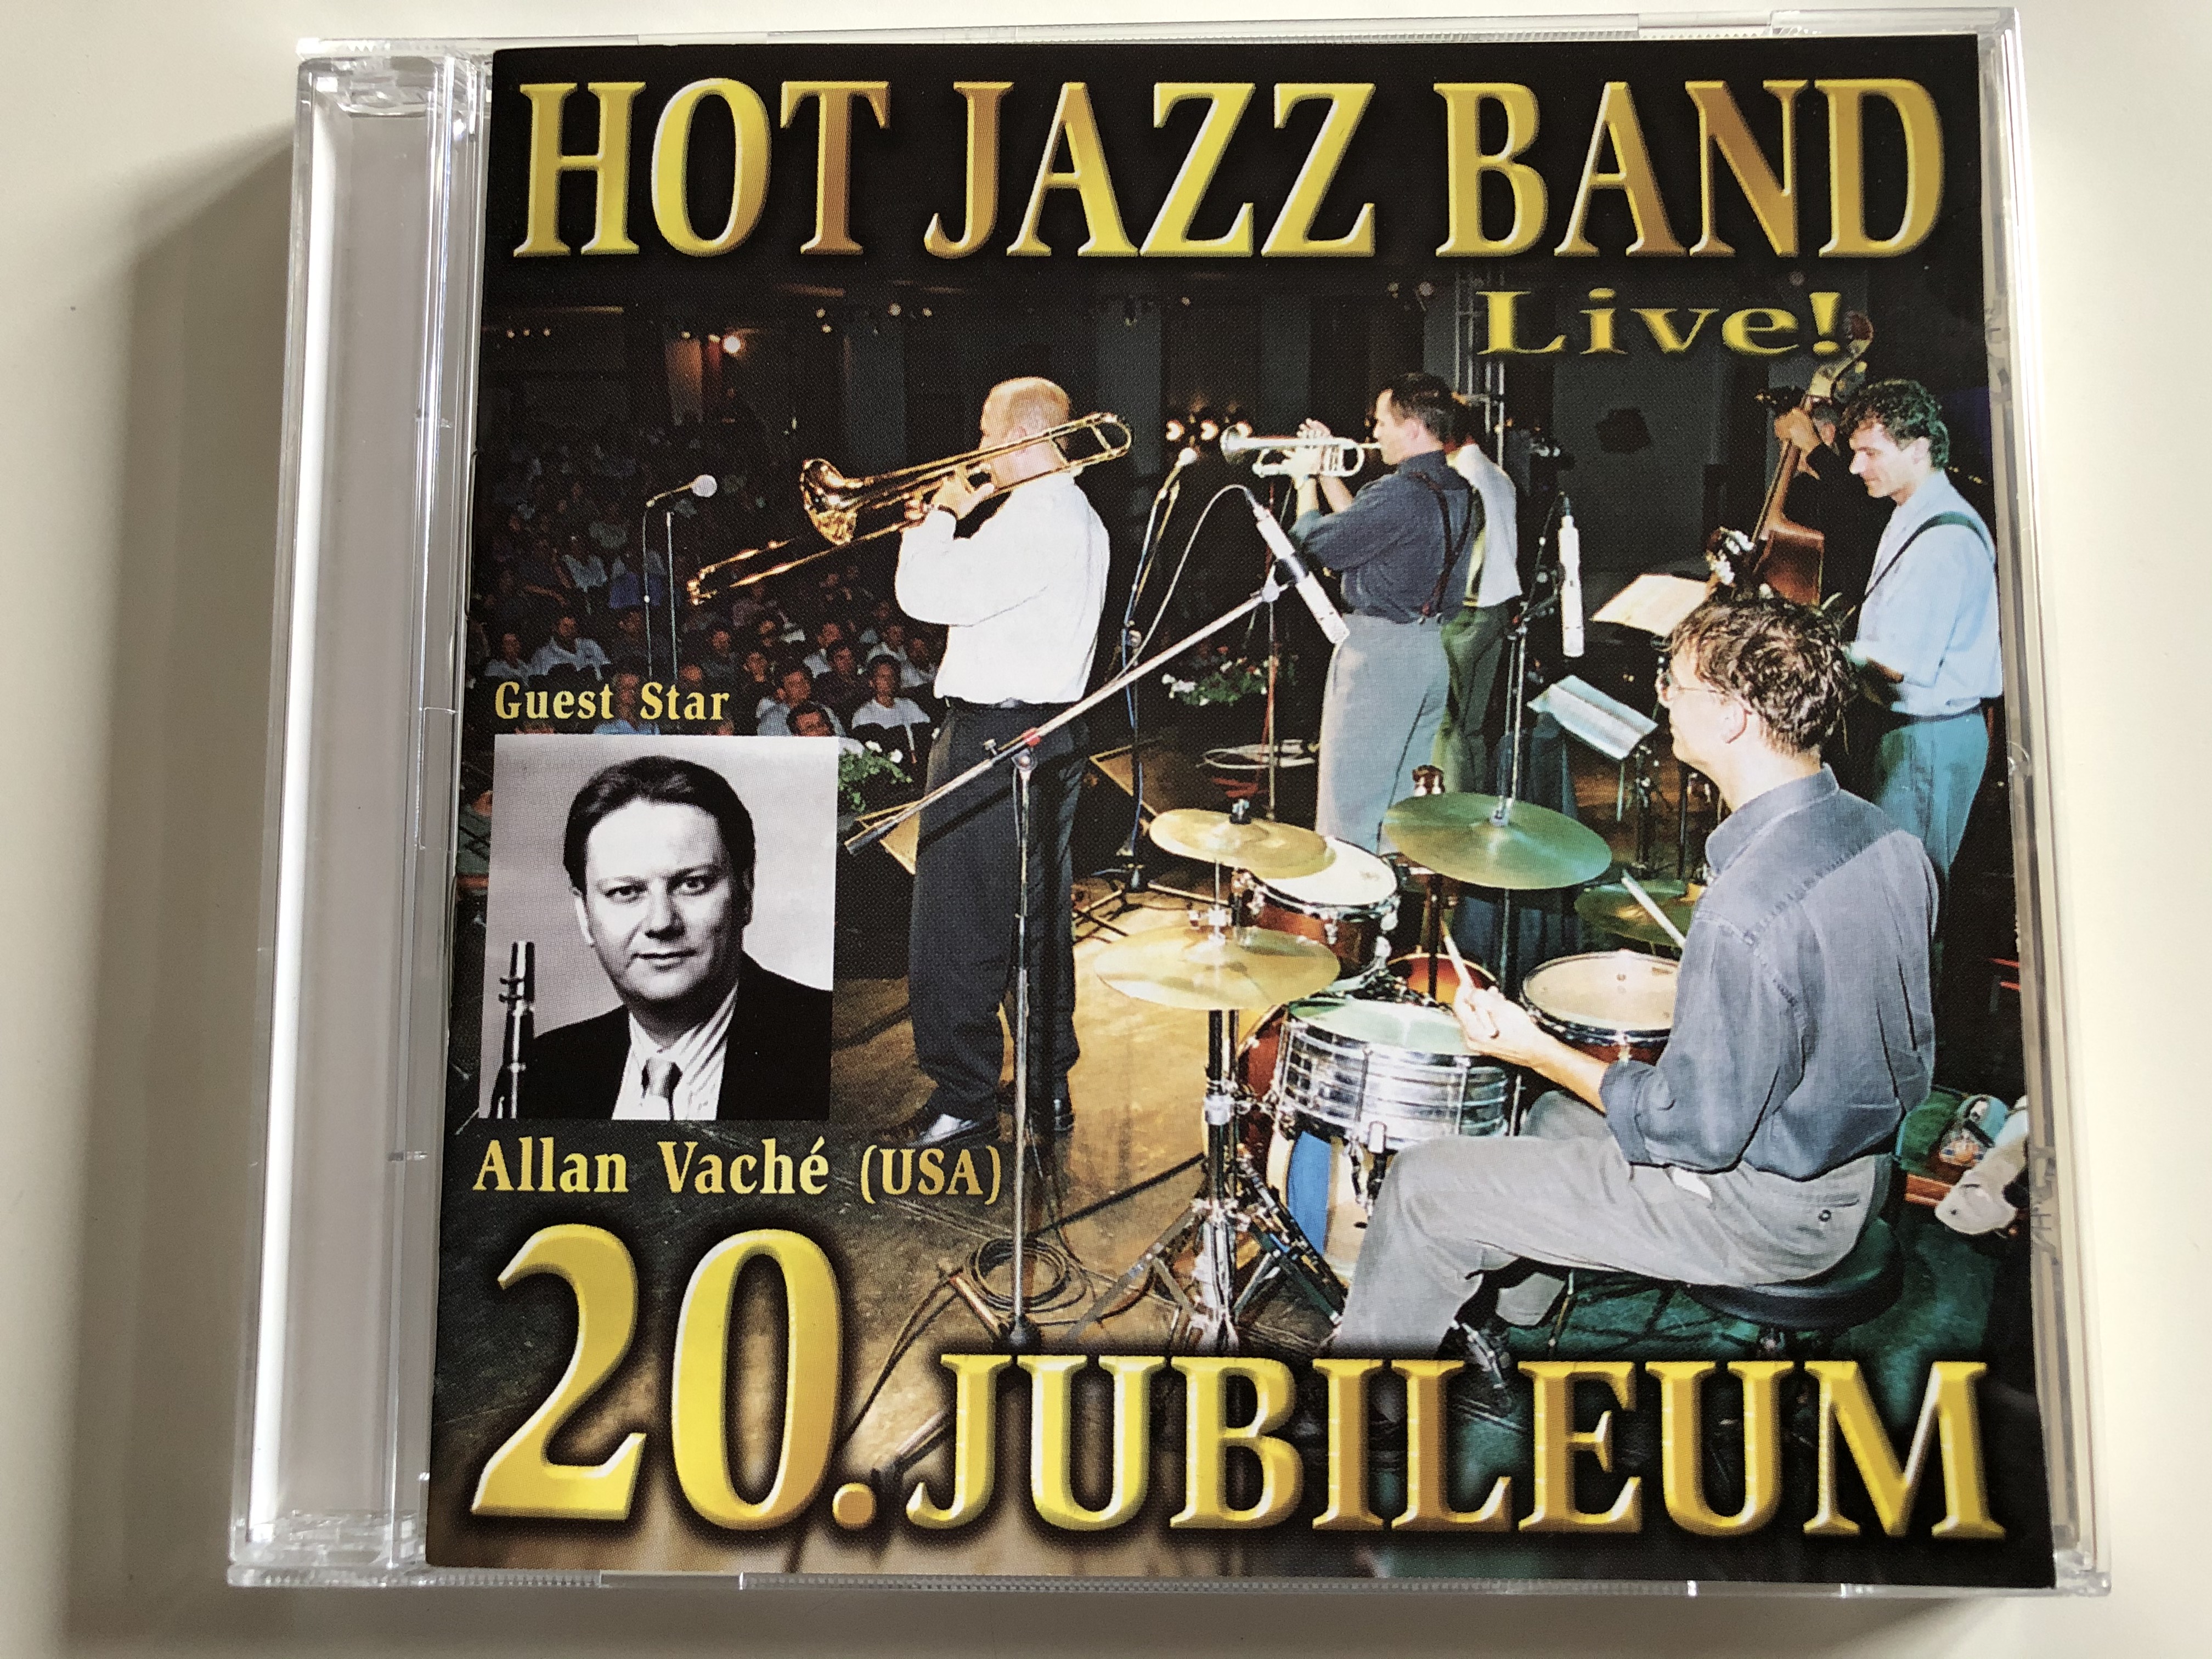 hot-jazz-band-live-allan-vache-usa-20.jubileum-hot-jazz-band-budapest-audio-cd-2005-hjb-009-1-.jpg